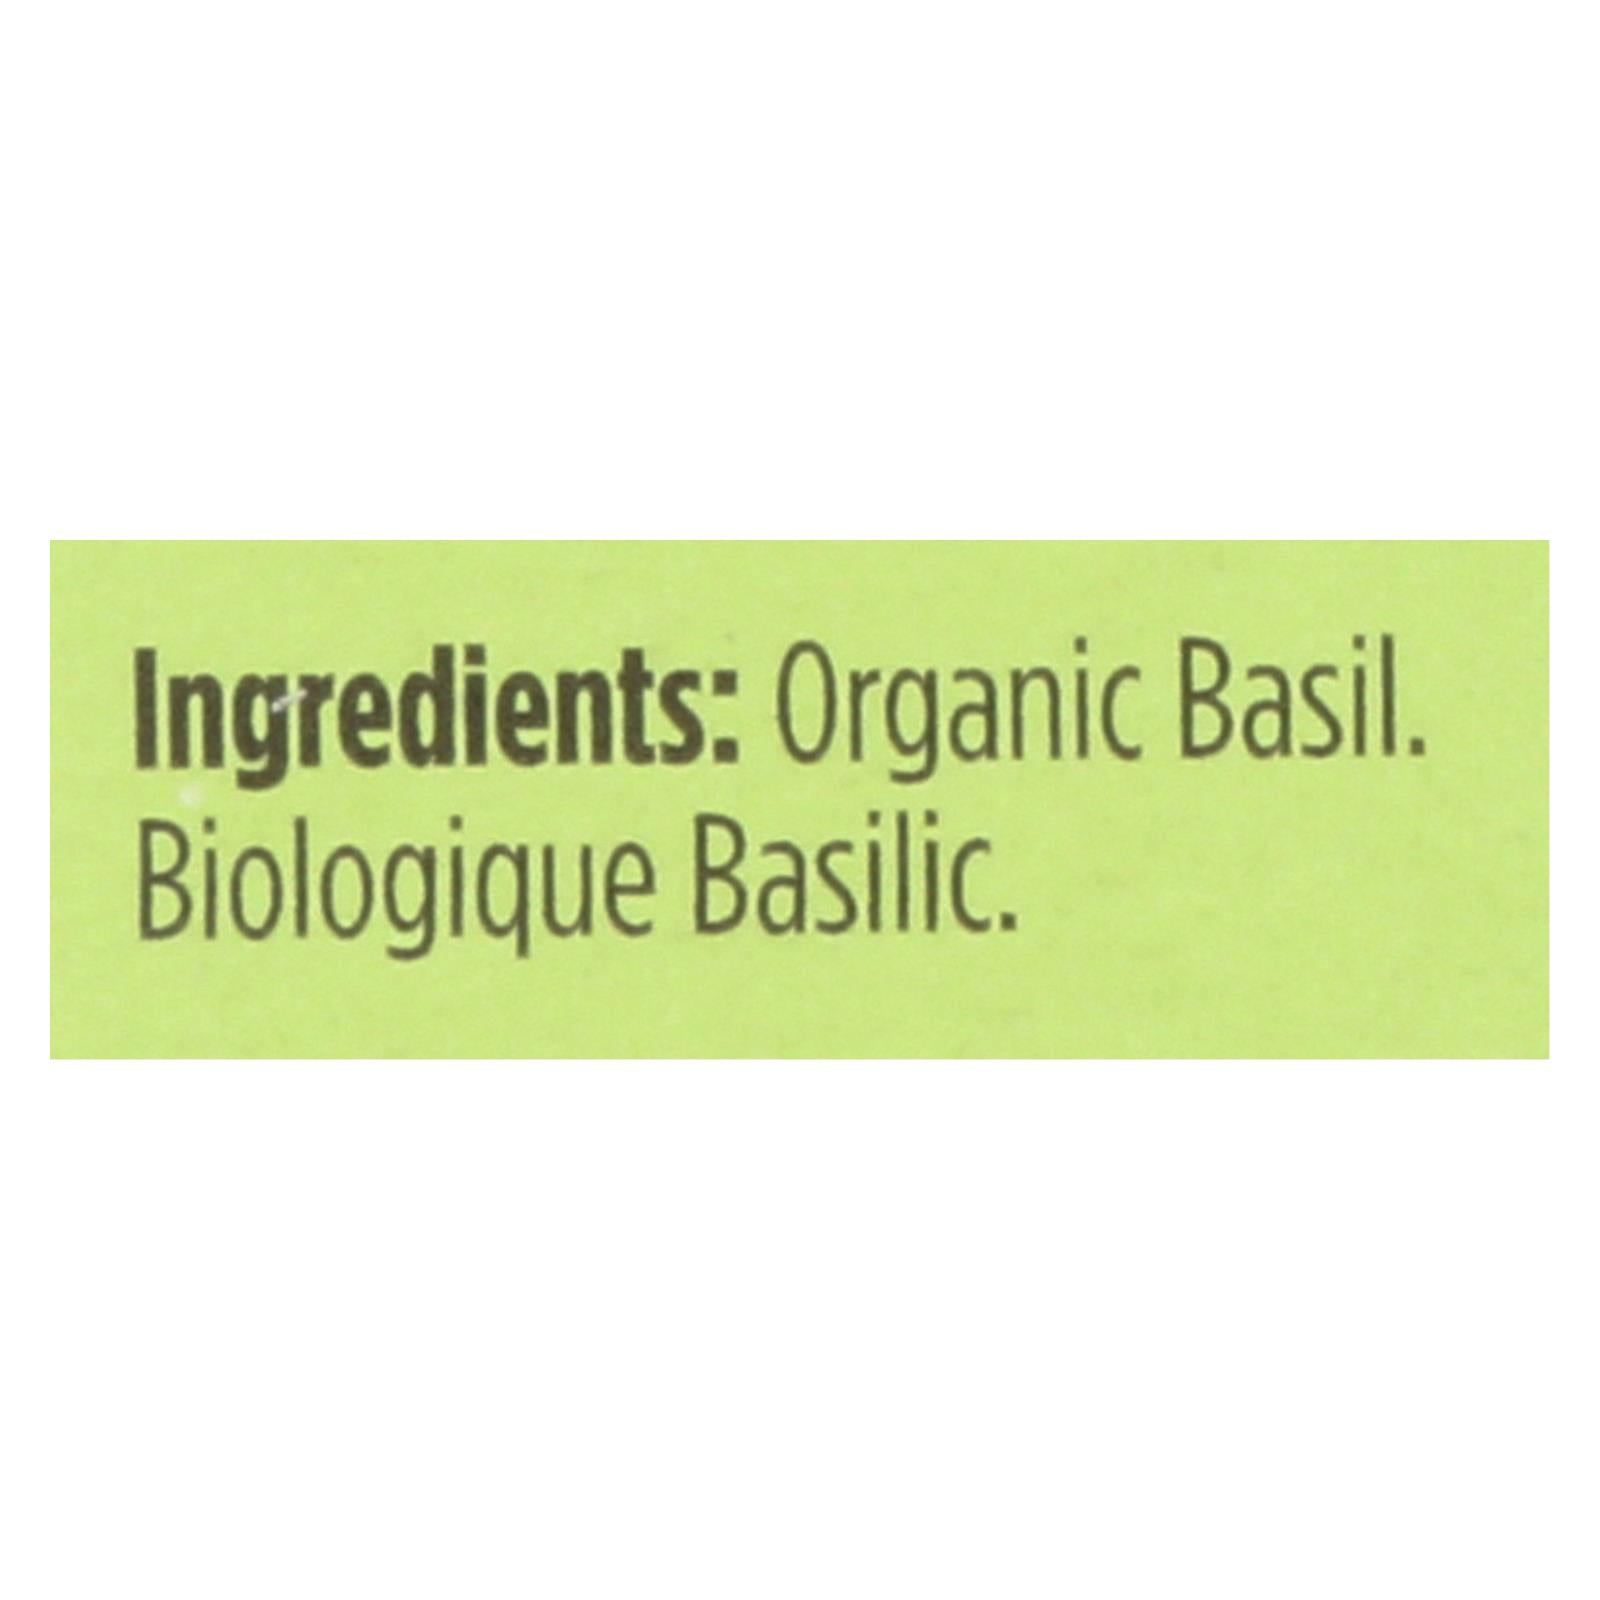 Spicely Organics - Organic Basil - Case of 6 - 0.1 oz.